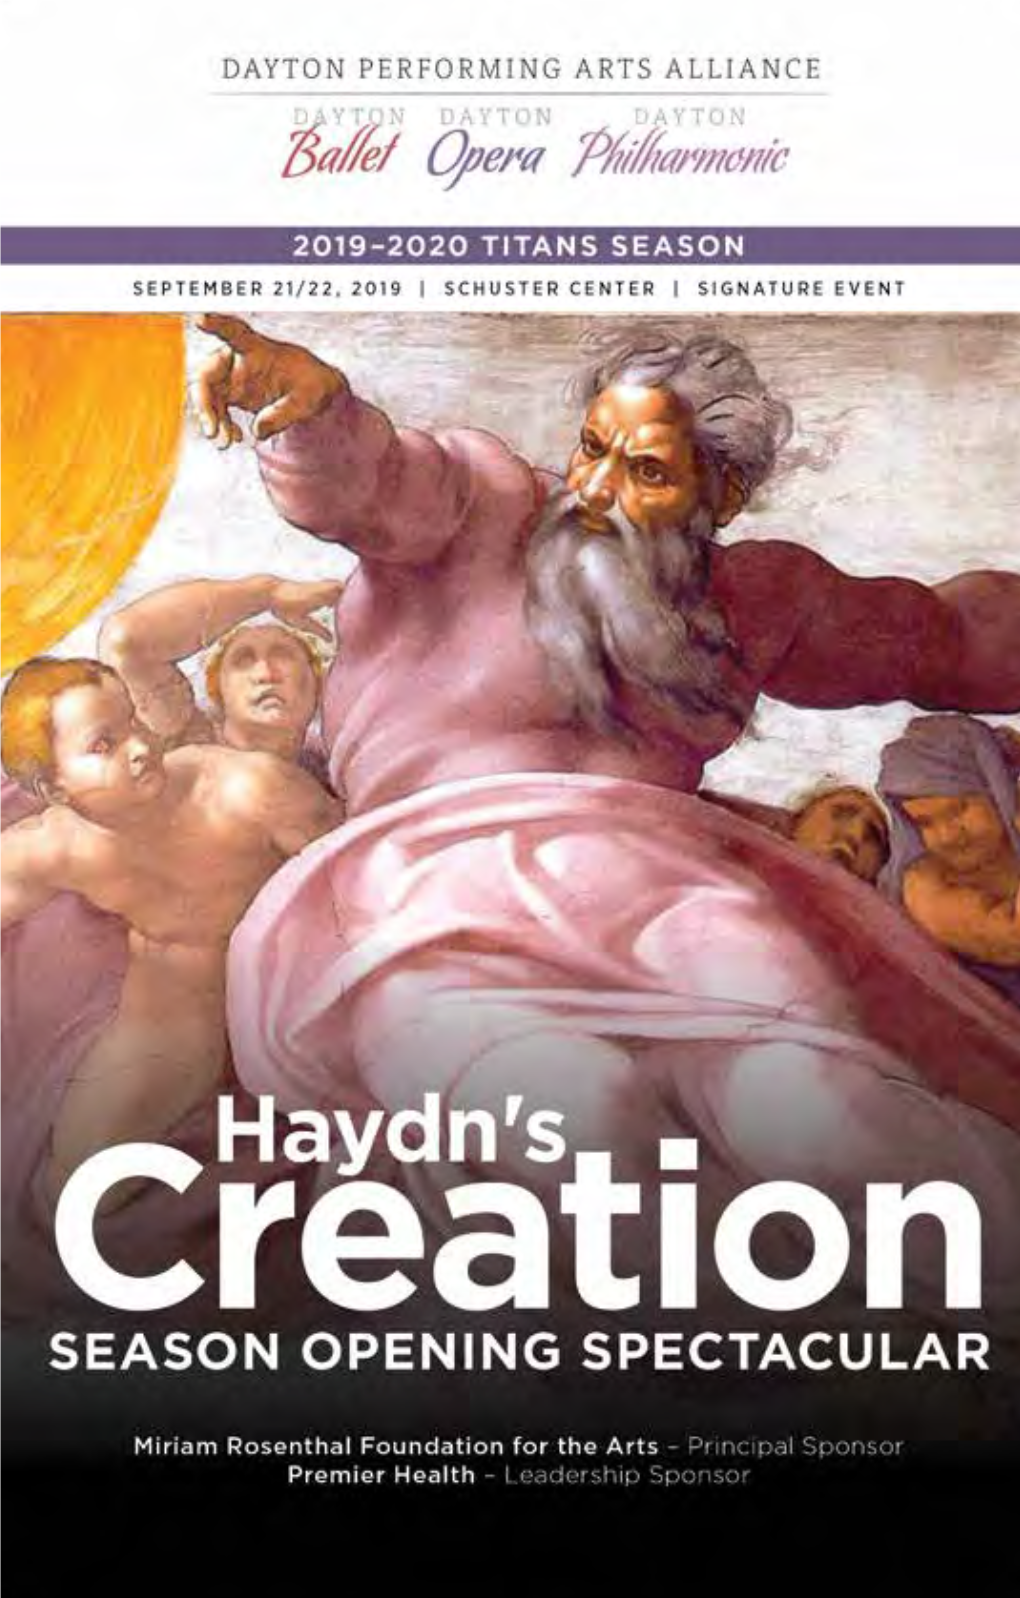 Season Opening Spectacular Haydn's Creation